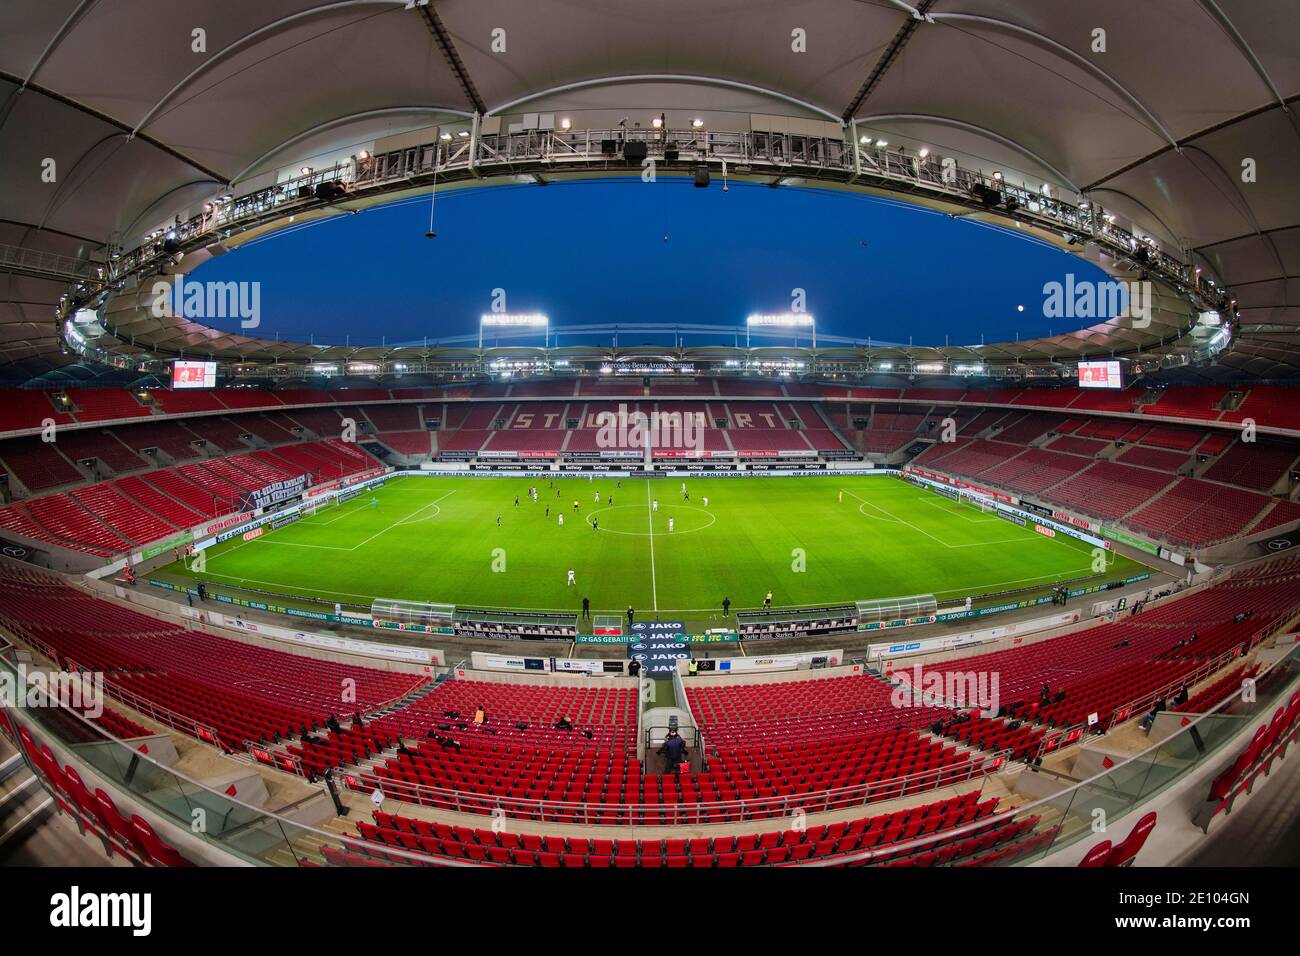 VfB Stuttgart contra el FC Bayern Munich, juego fantasma, vista general del estadio en la hora azul, Mercedes-Benz Arena, Stuttgart, Baden-Württemberg, Alemania, EUR Foto de stock